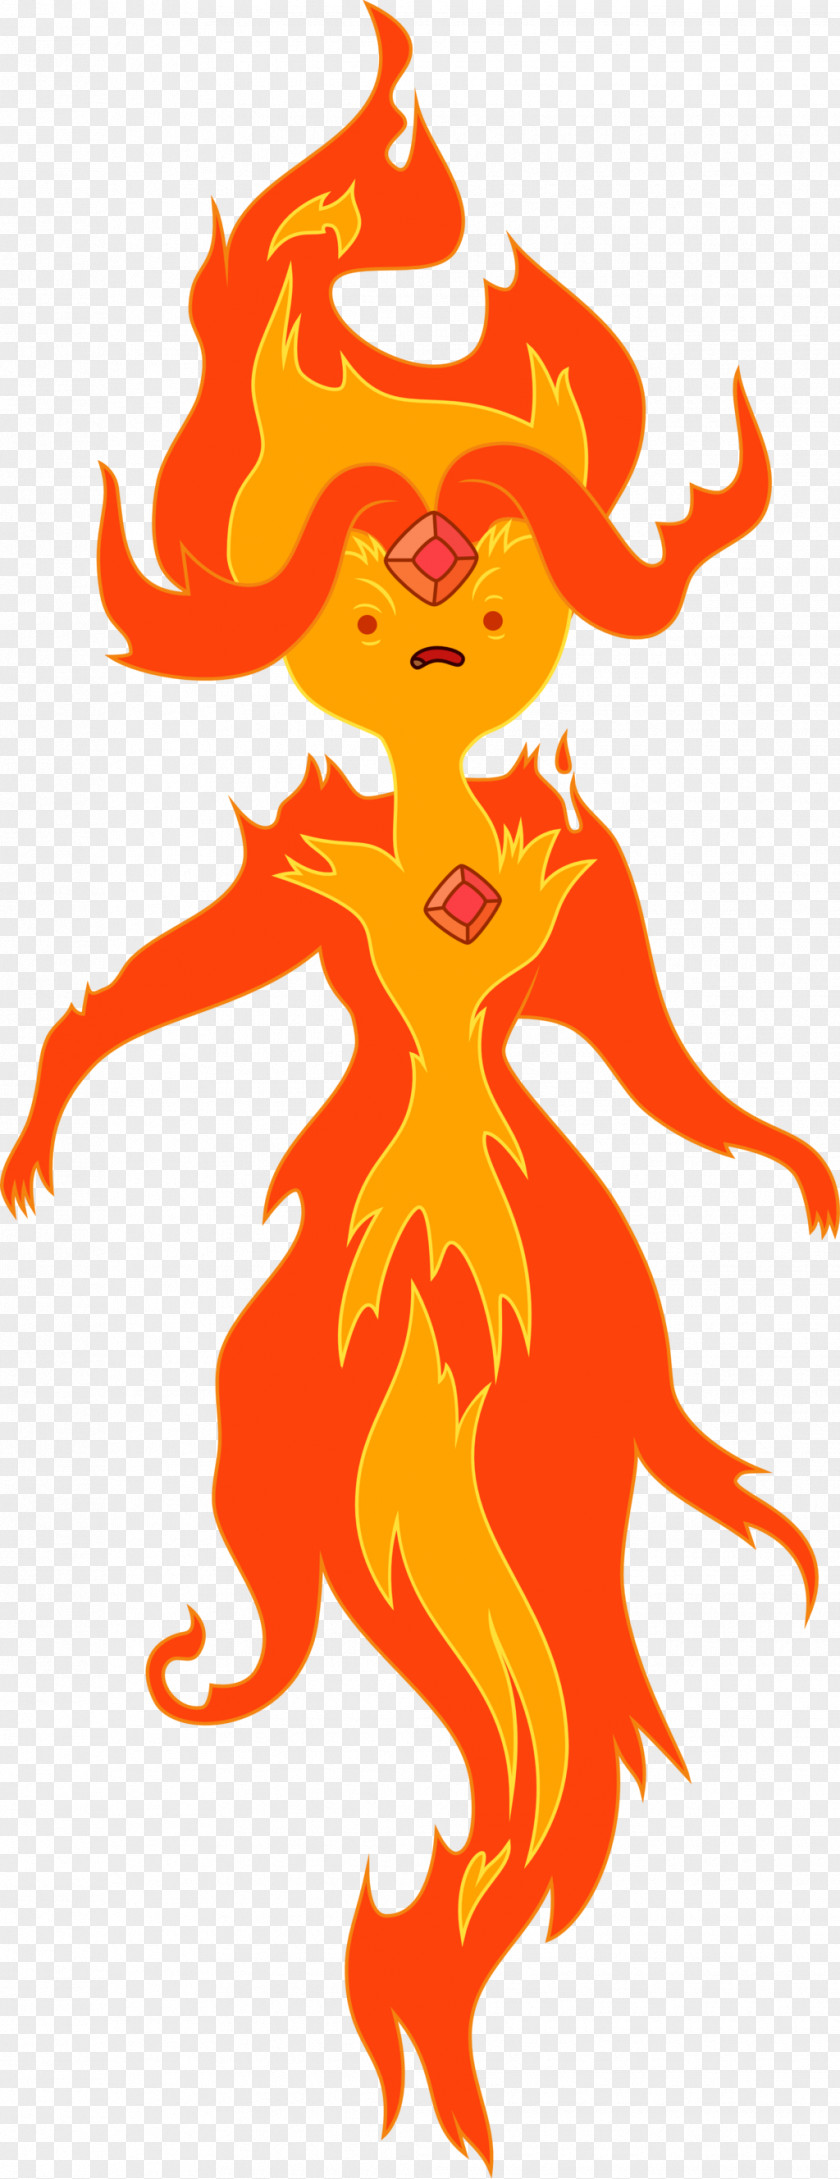 Flame Finn The Human Princess Ice King Sticker PNG